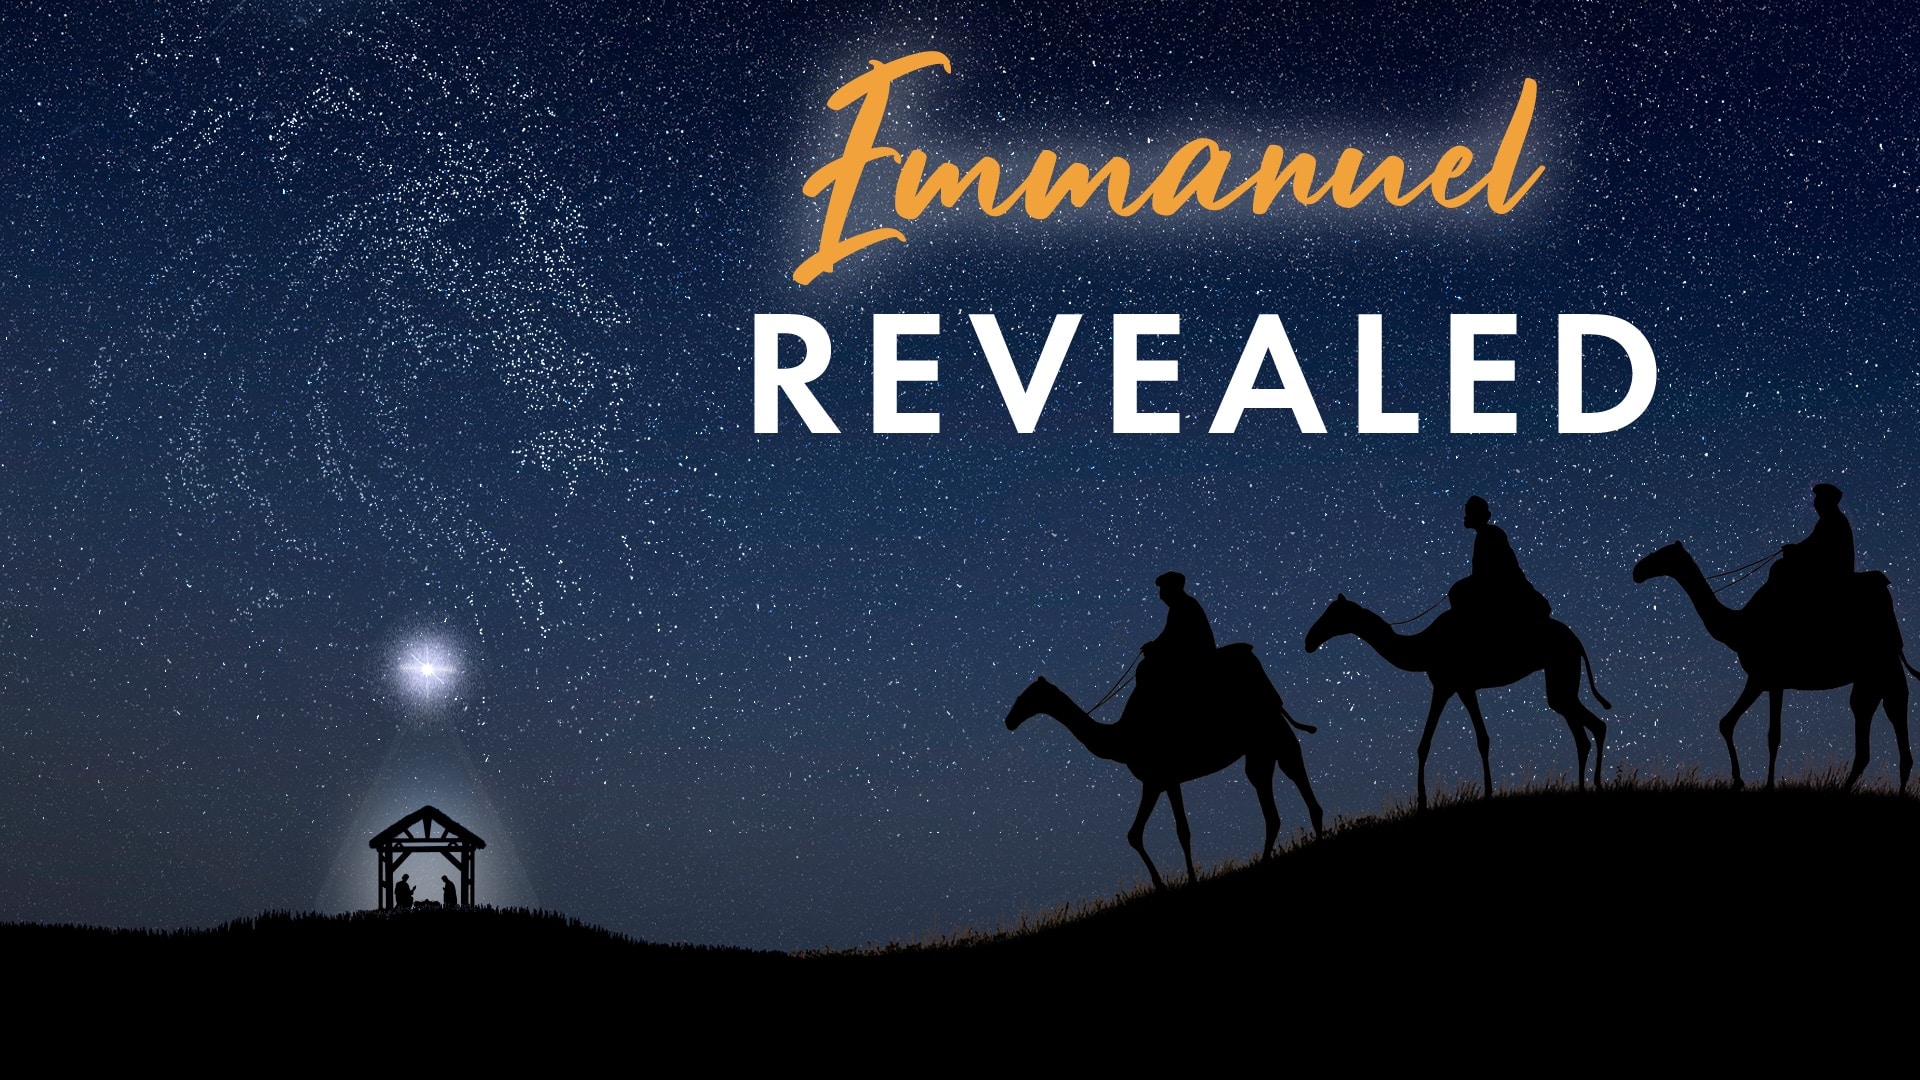 Emmanuel Revealed: The Bridegroom has Come